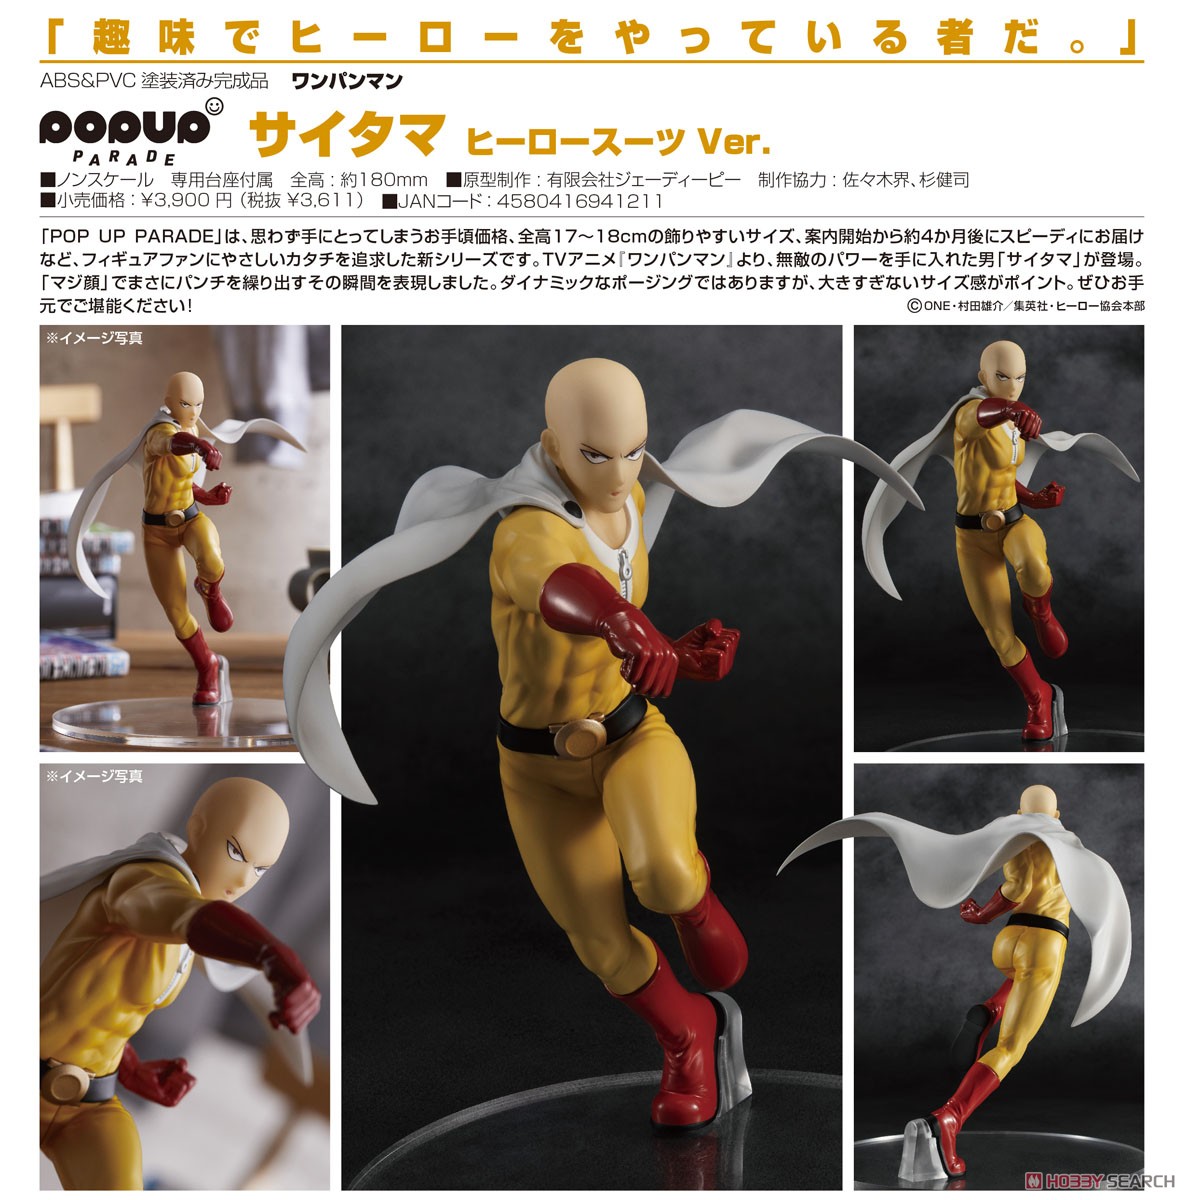 Pop Up Parade One Punch Man - Saitama: Hero Costume Ver.